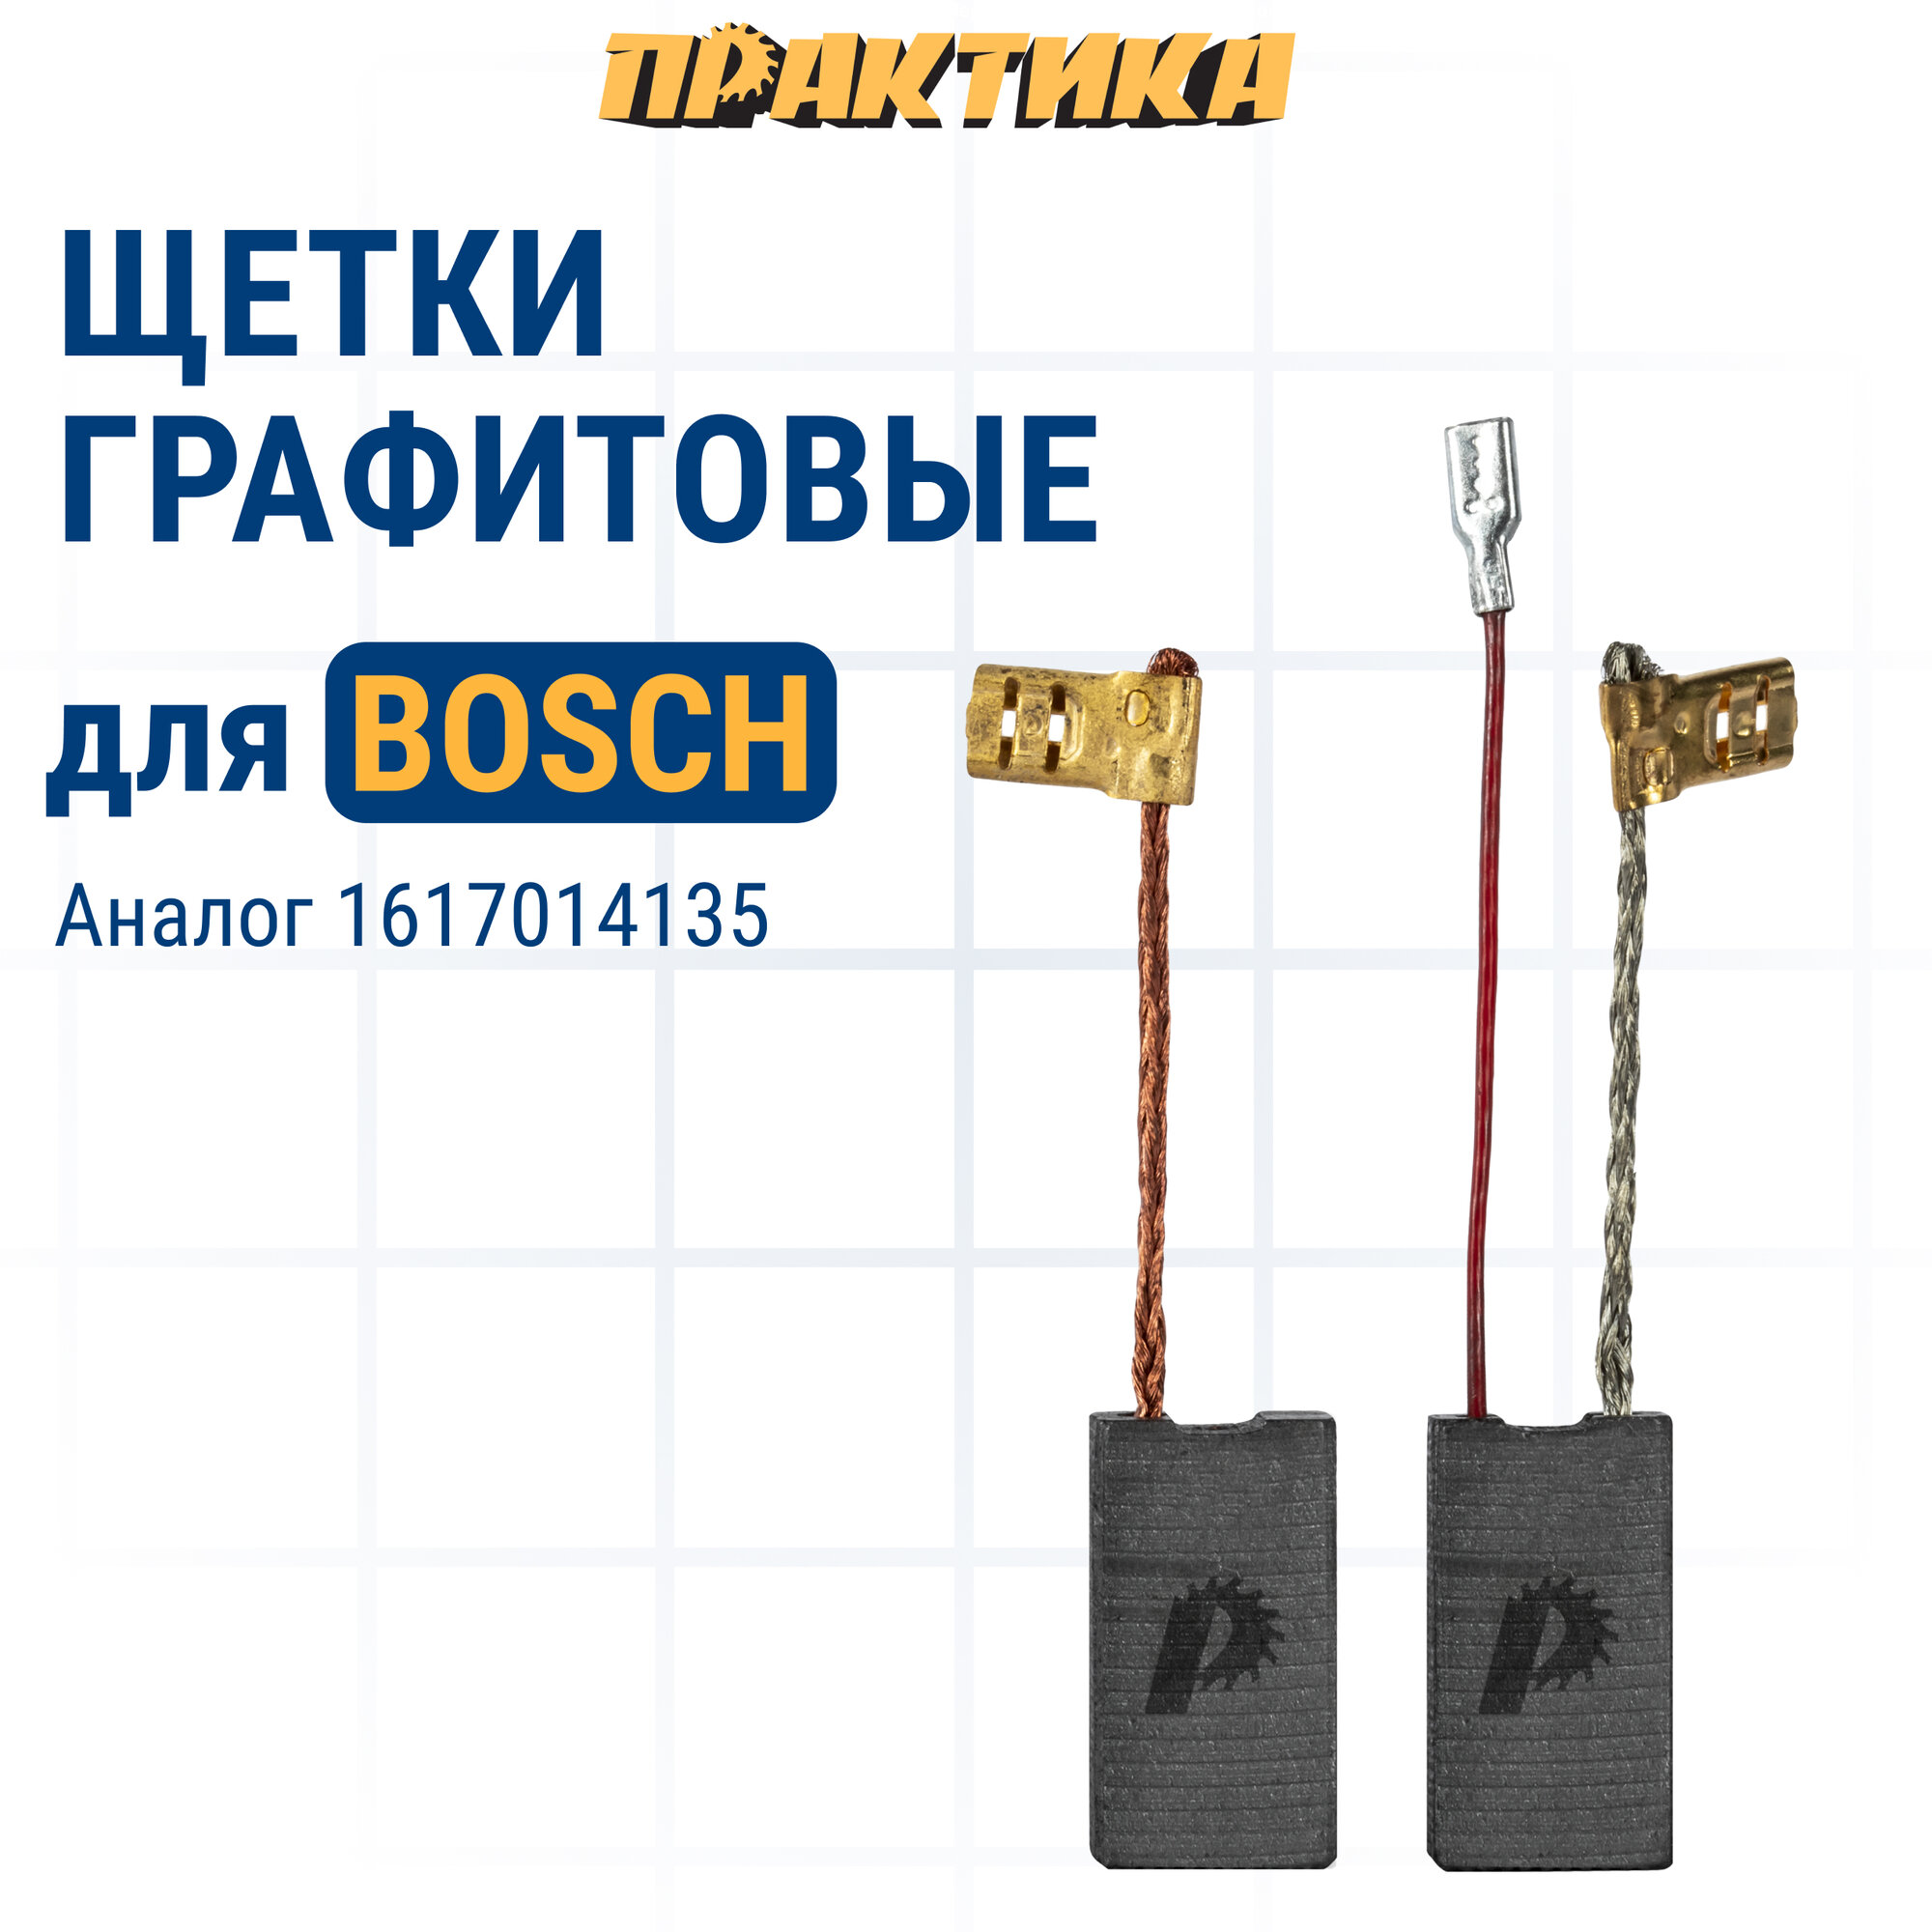 Щетка графитовая ПРАКТИКА для BOSCH (аналог 1617014135) 6,2x12,5x23 мм, автостоп (790-823)